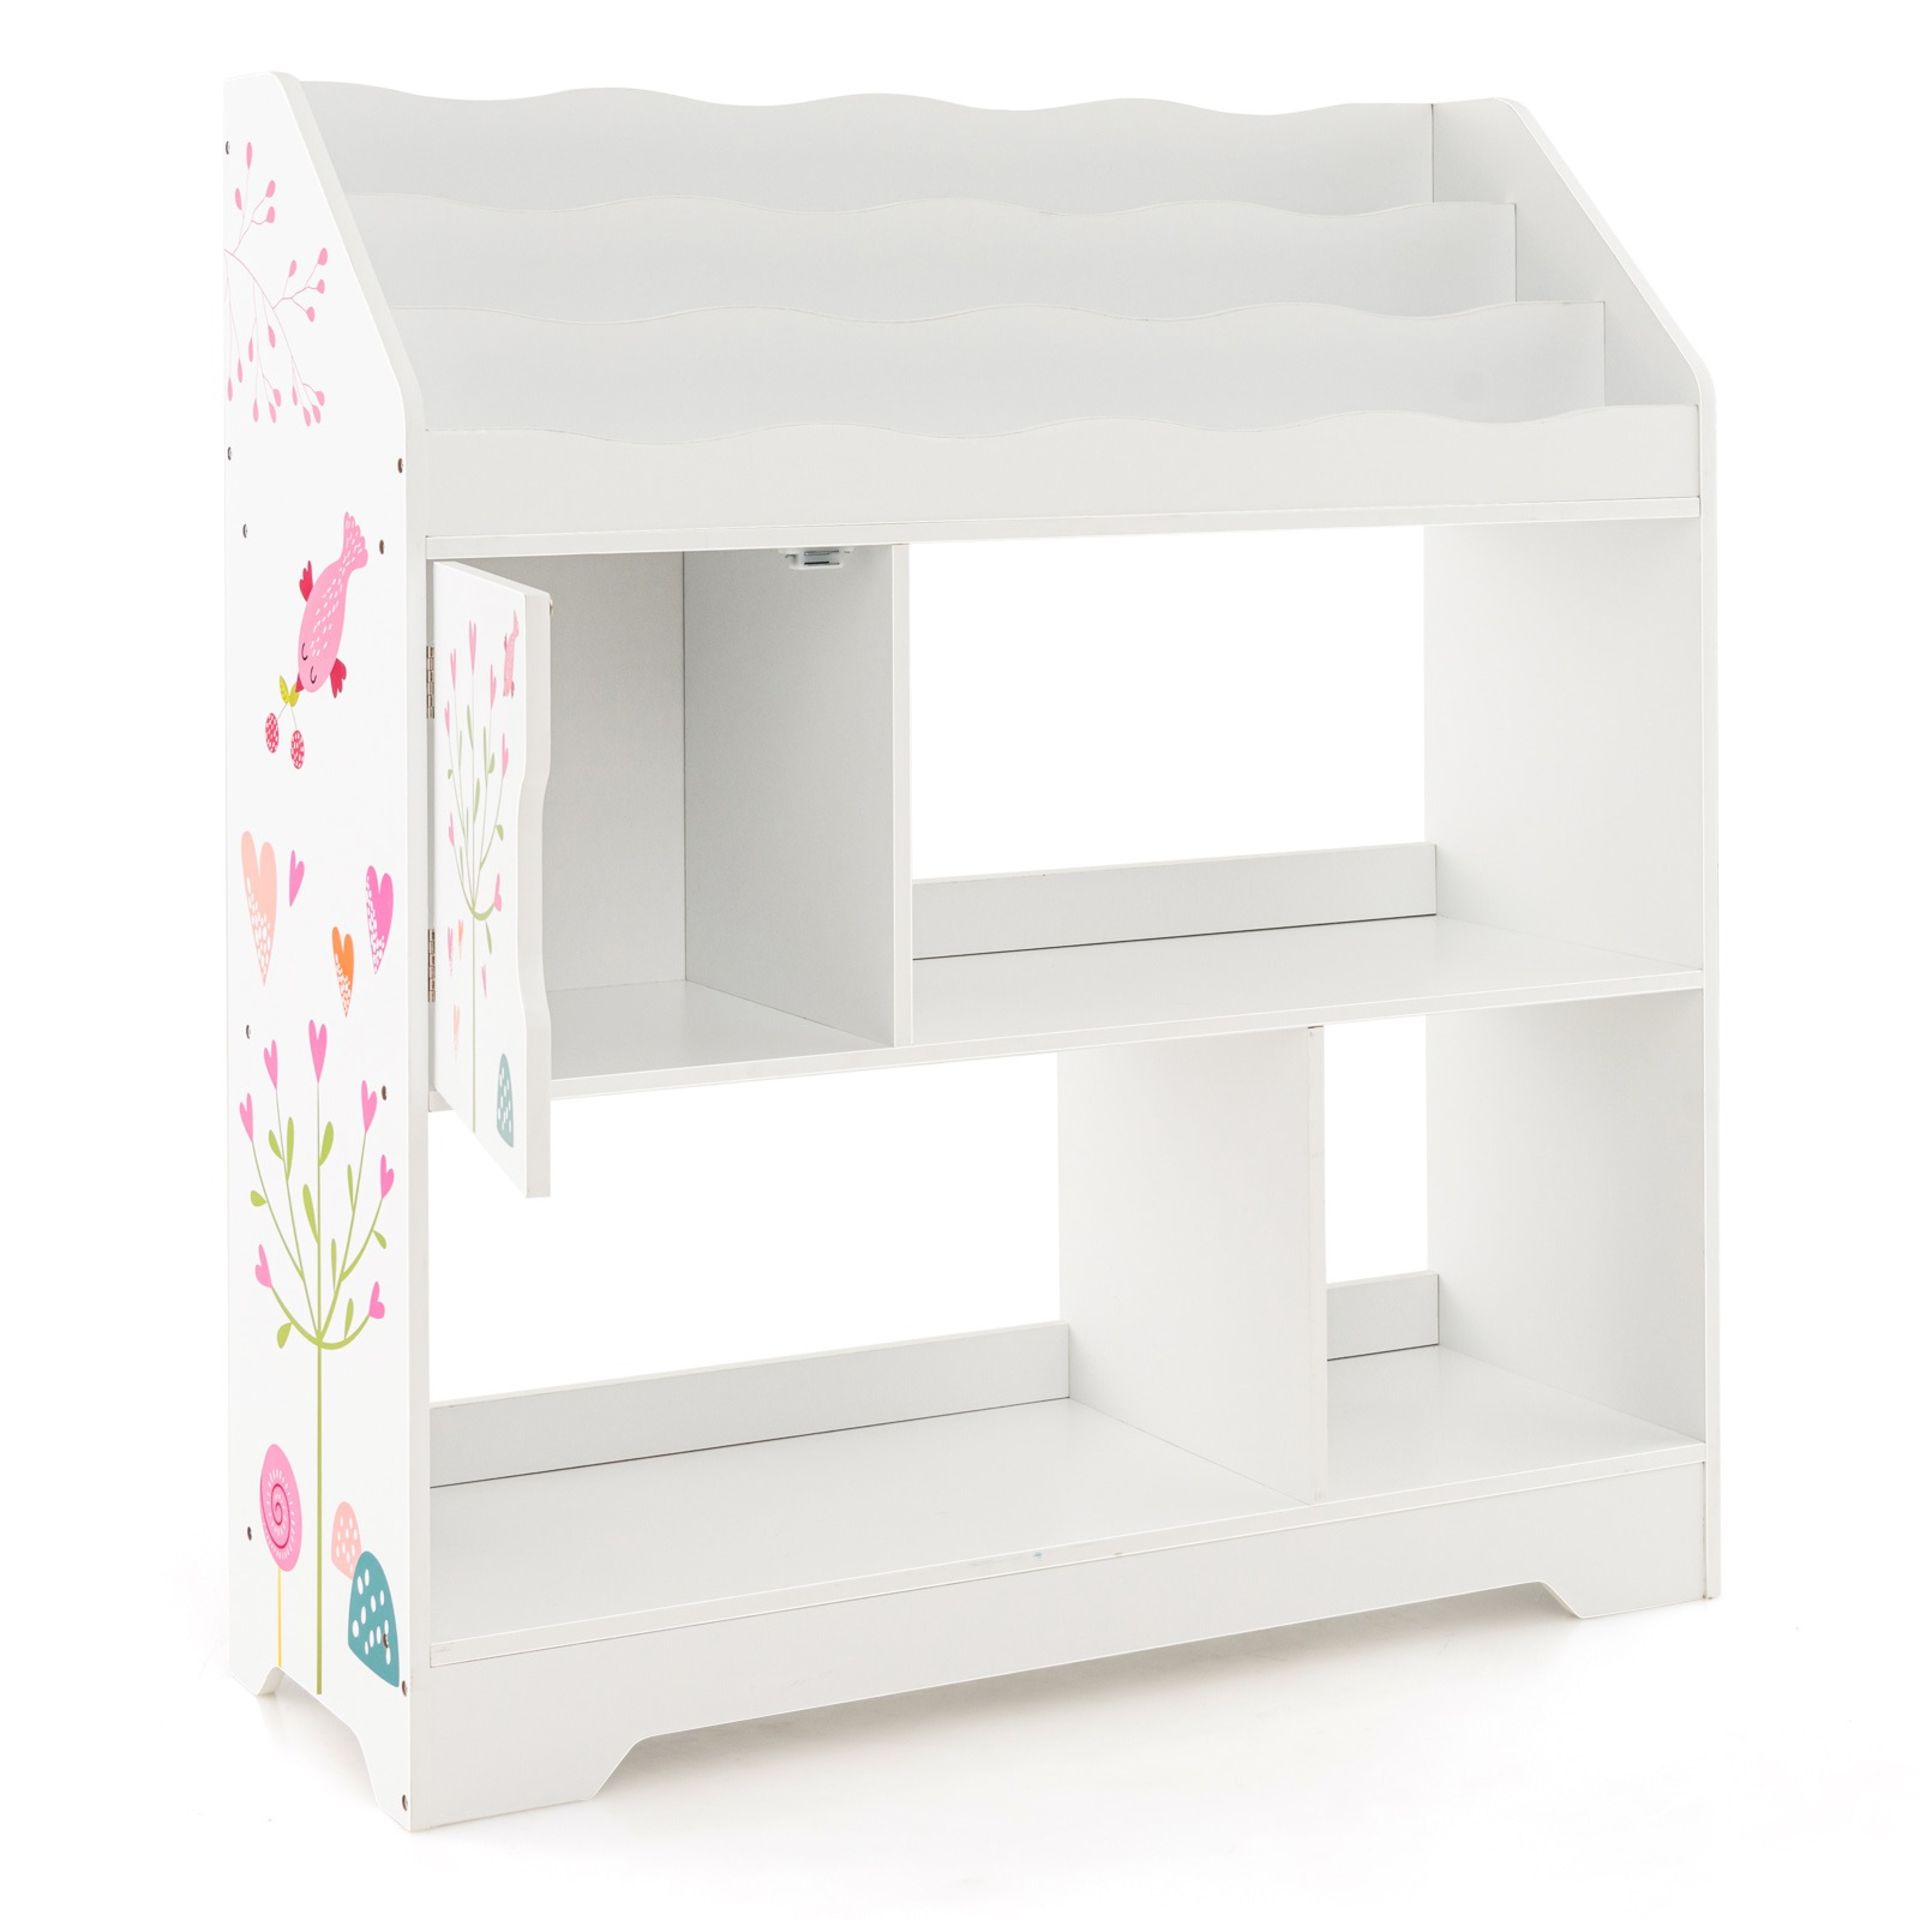 Toy Storage Organizer Display Stand with Book Shelf-White - ER54